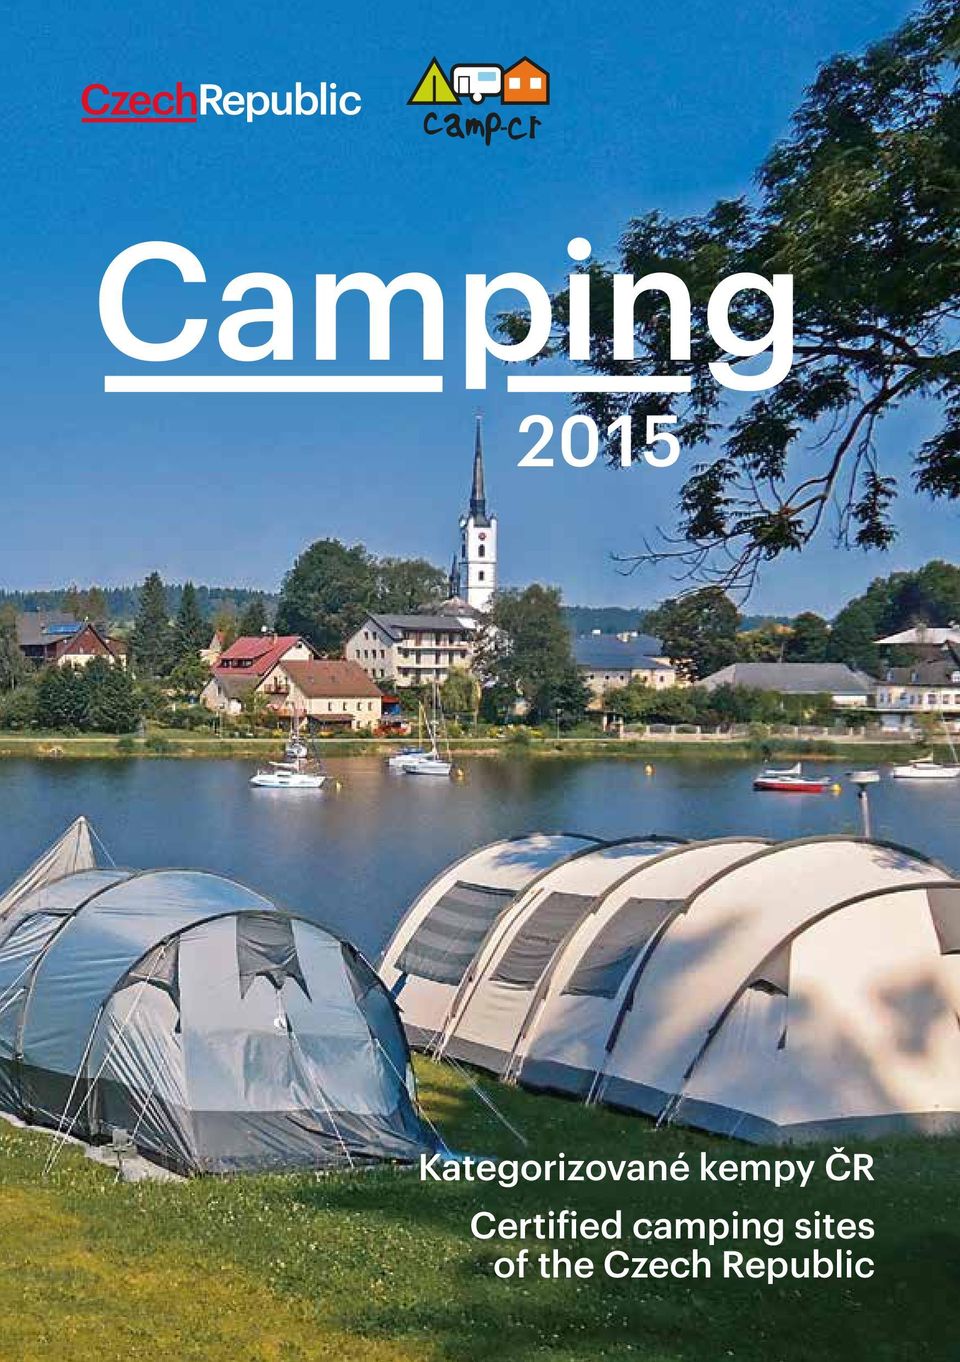 ČR Certified camping